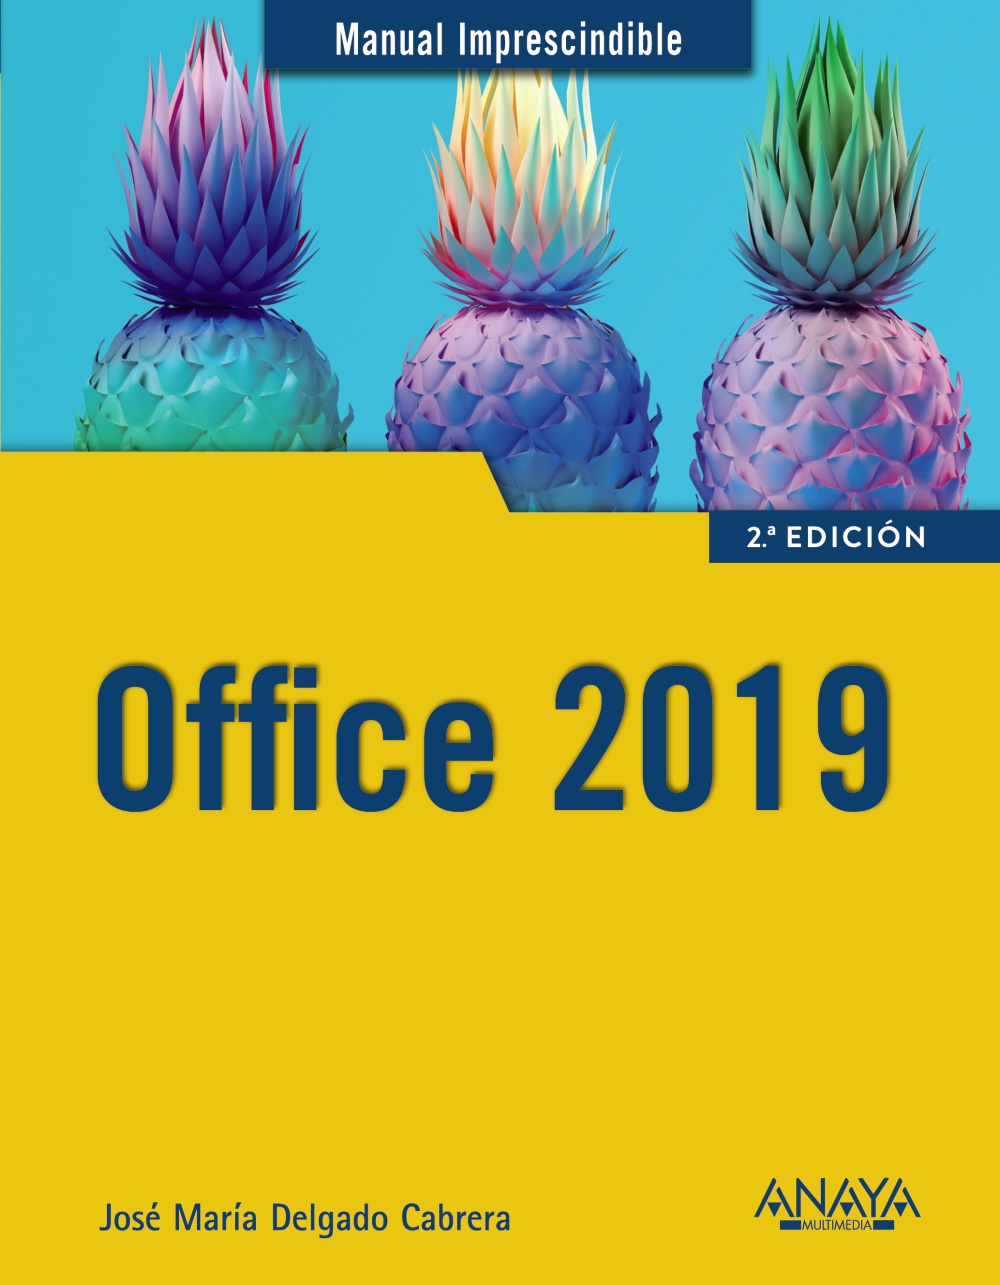 Office 2019 - Anaya Multimedia